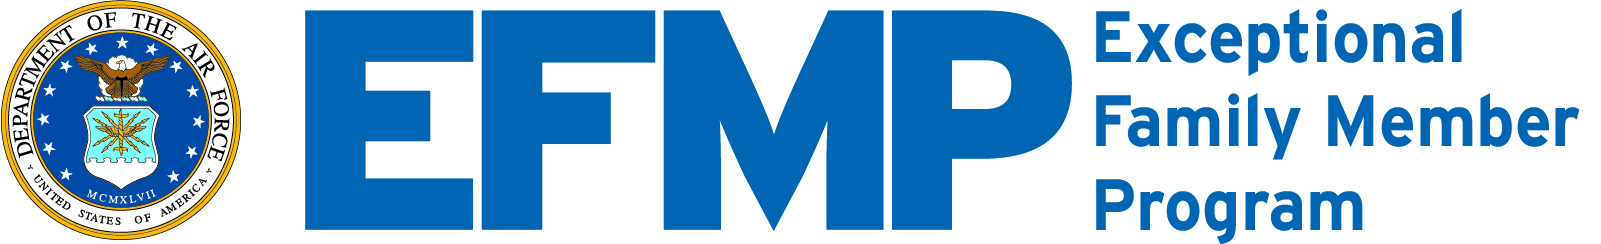 EMFP logo